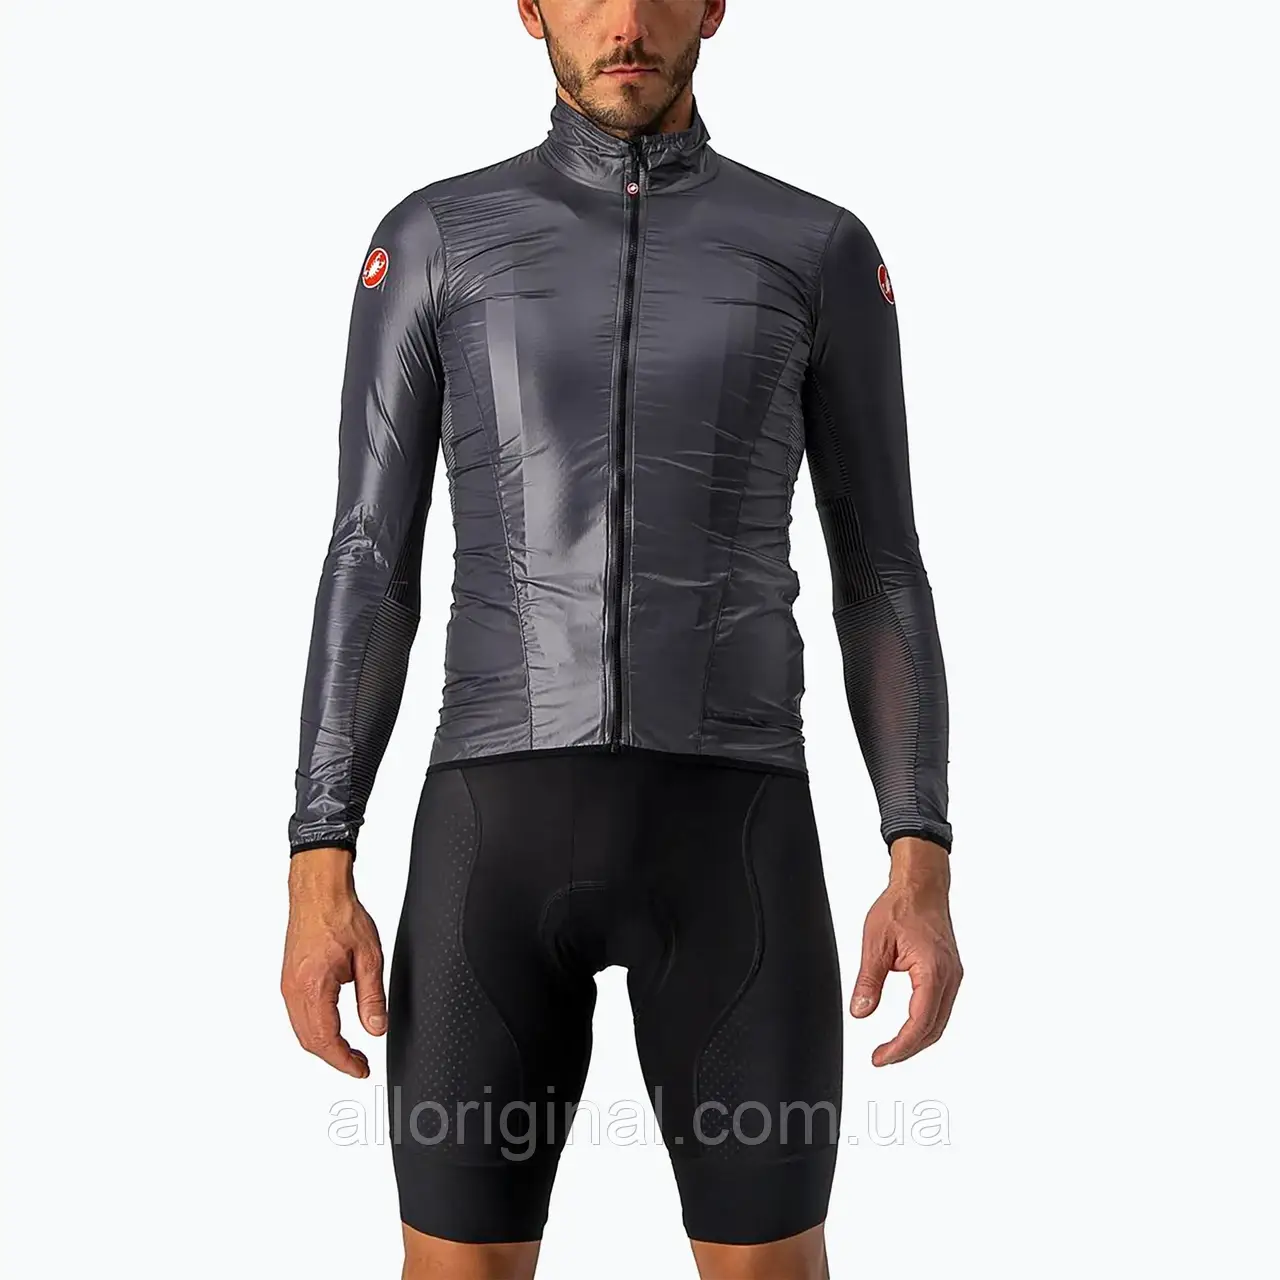 Urbanshop com ua Чоловіча велосипедна куртка Castelli Aria Shell темно-сіра РОЗМІРИ ЗАПИТУЙТЕ